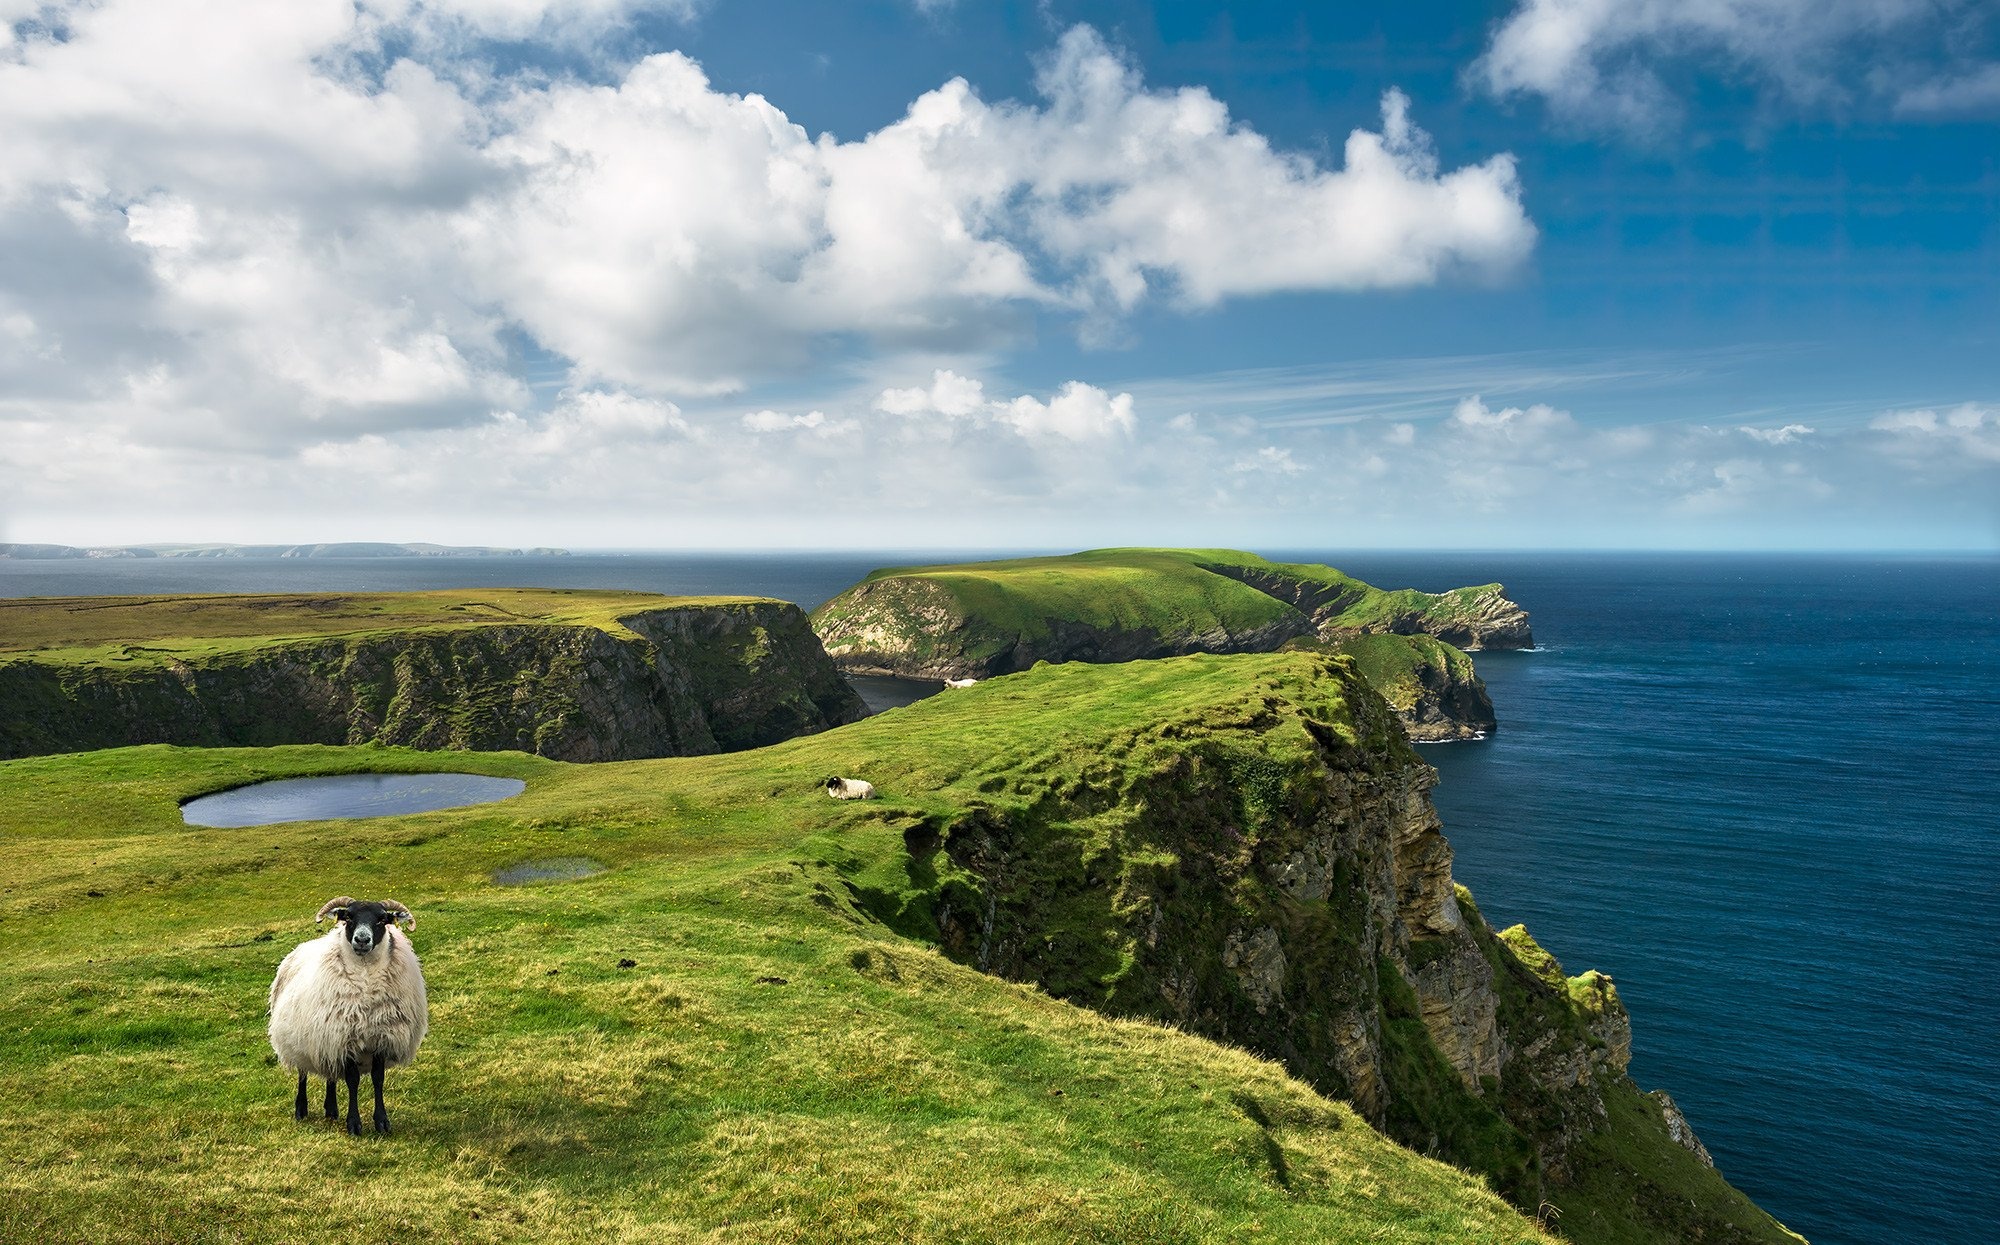 Ireland's charm, HD wallpapers, Enchanting landscapes, Irish pride, 2000x1250 HD Desktop